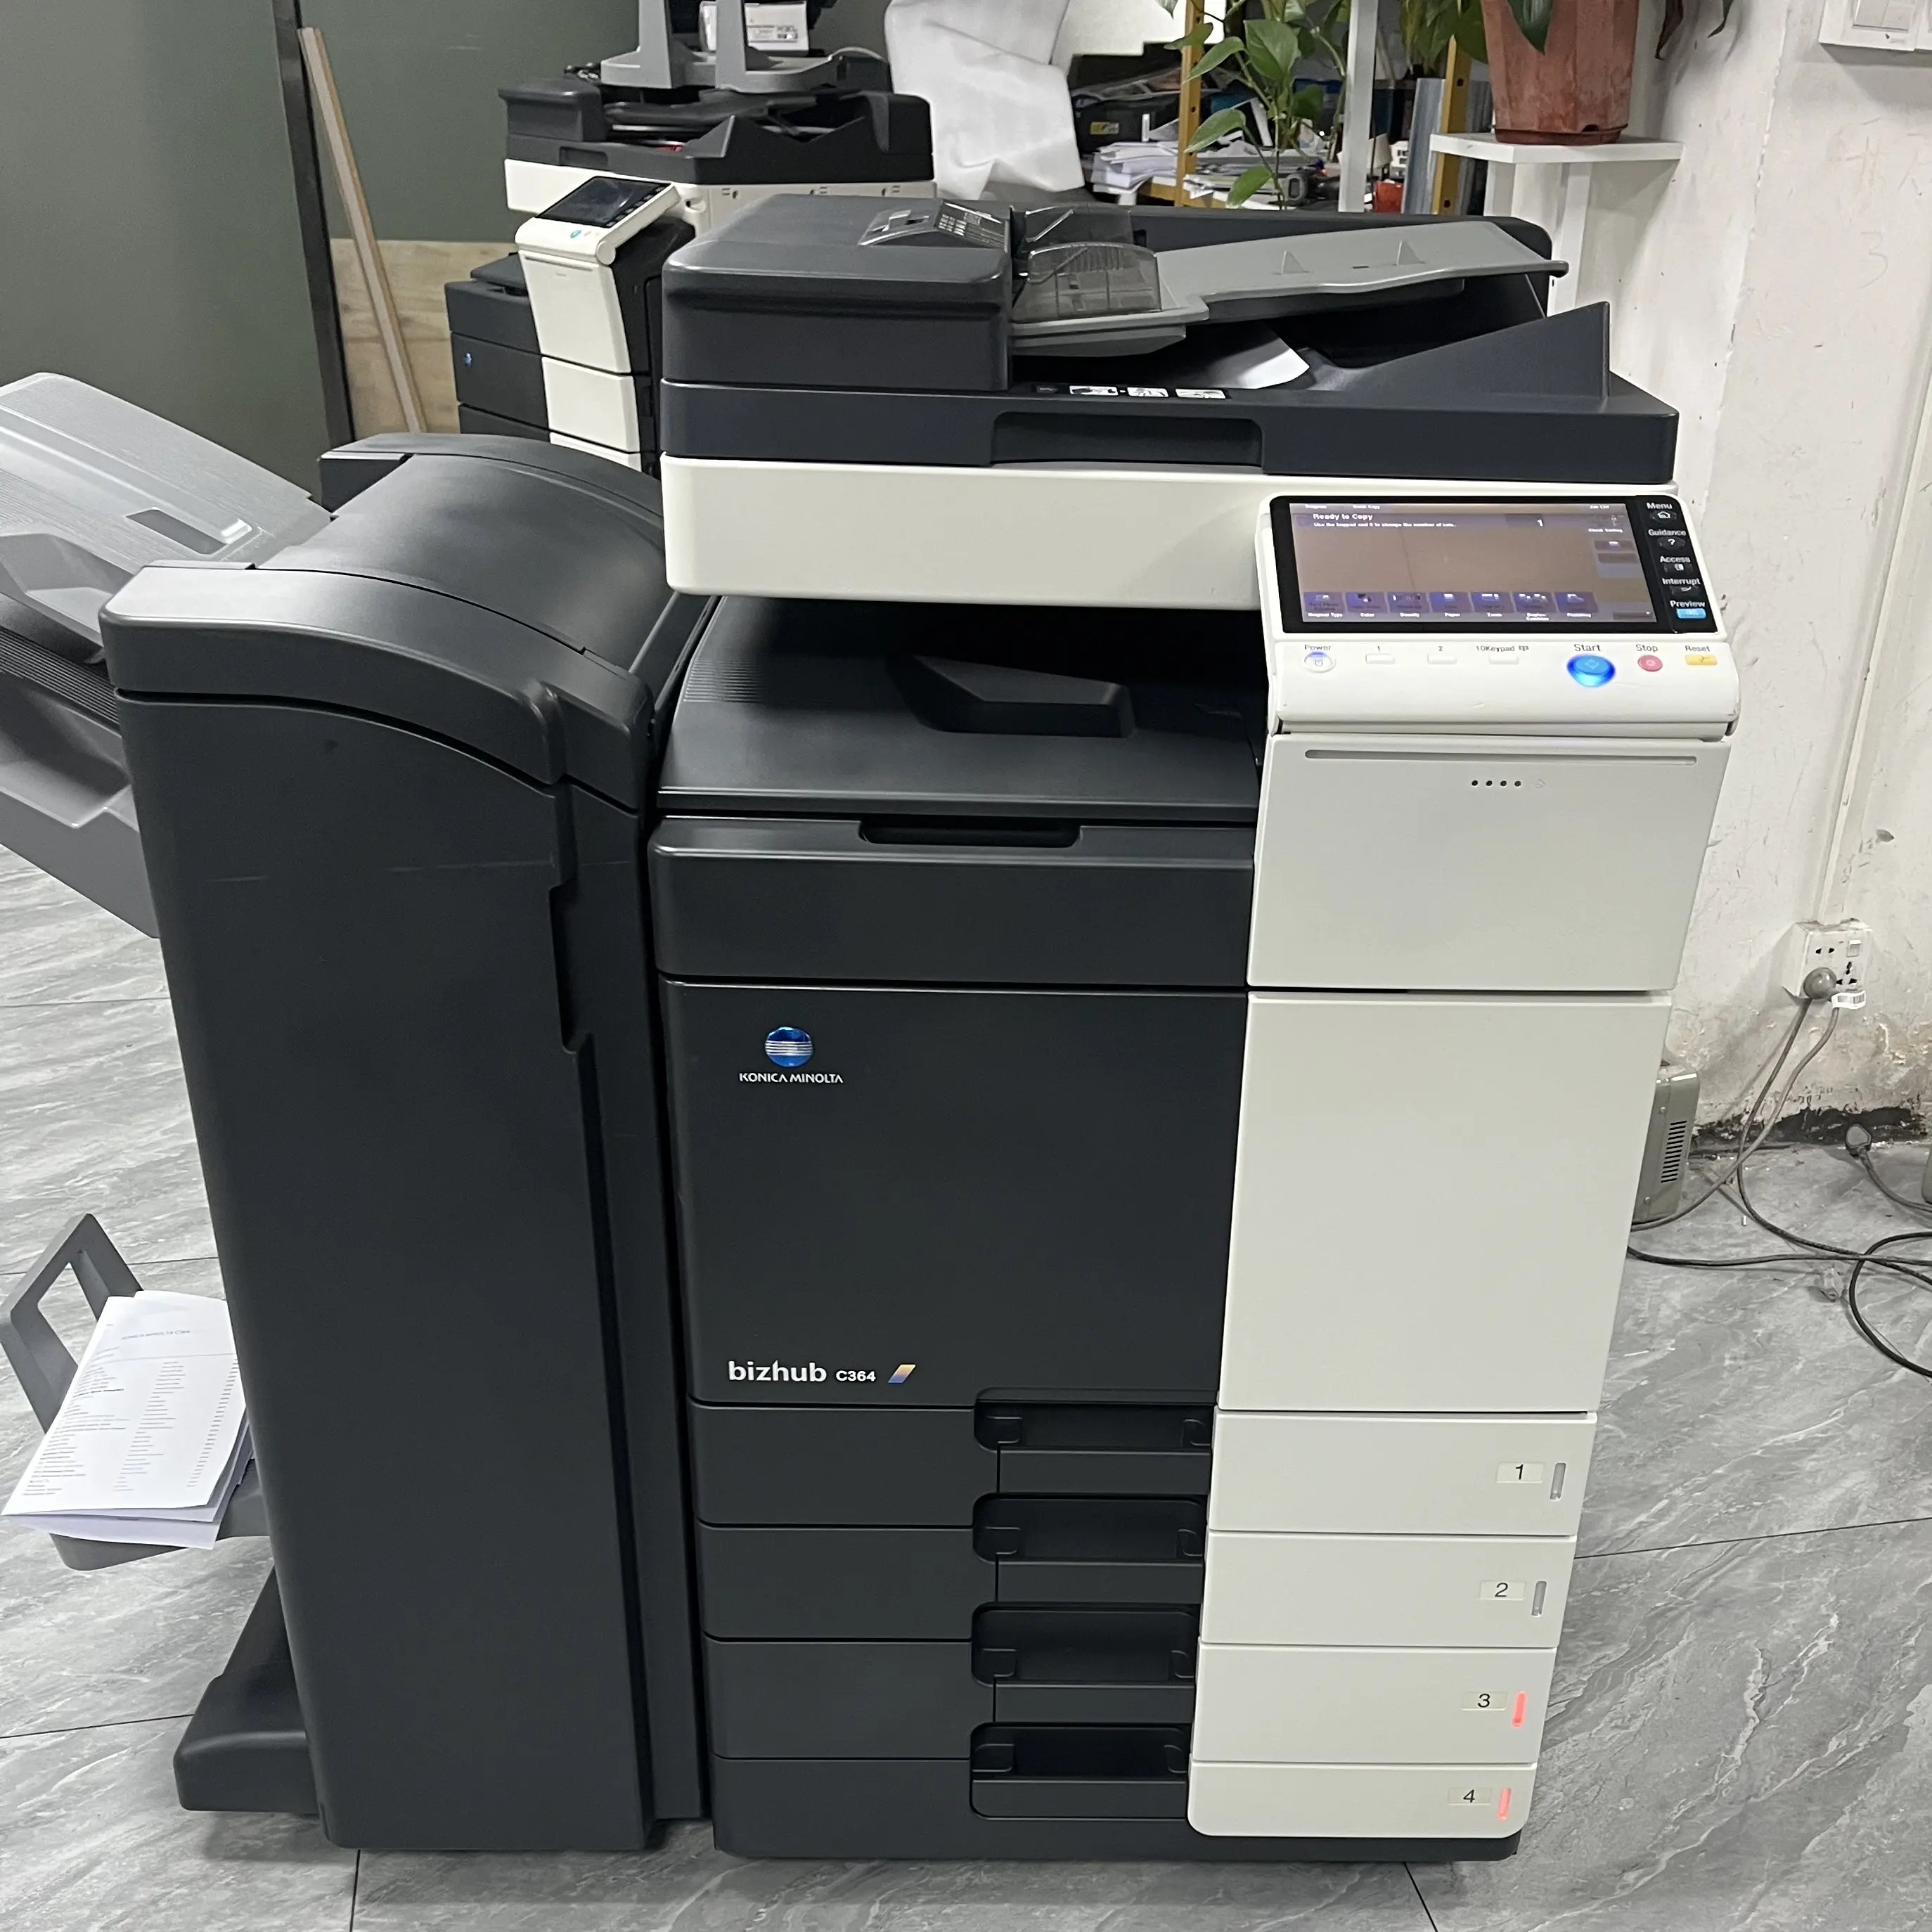 Used Copiers Refurbished A3 Photocopy Machine For Konica Minolta Bizhub C364e c452 C454e C554e C654e C754e Printer Machine Used